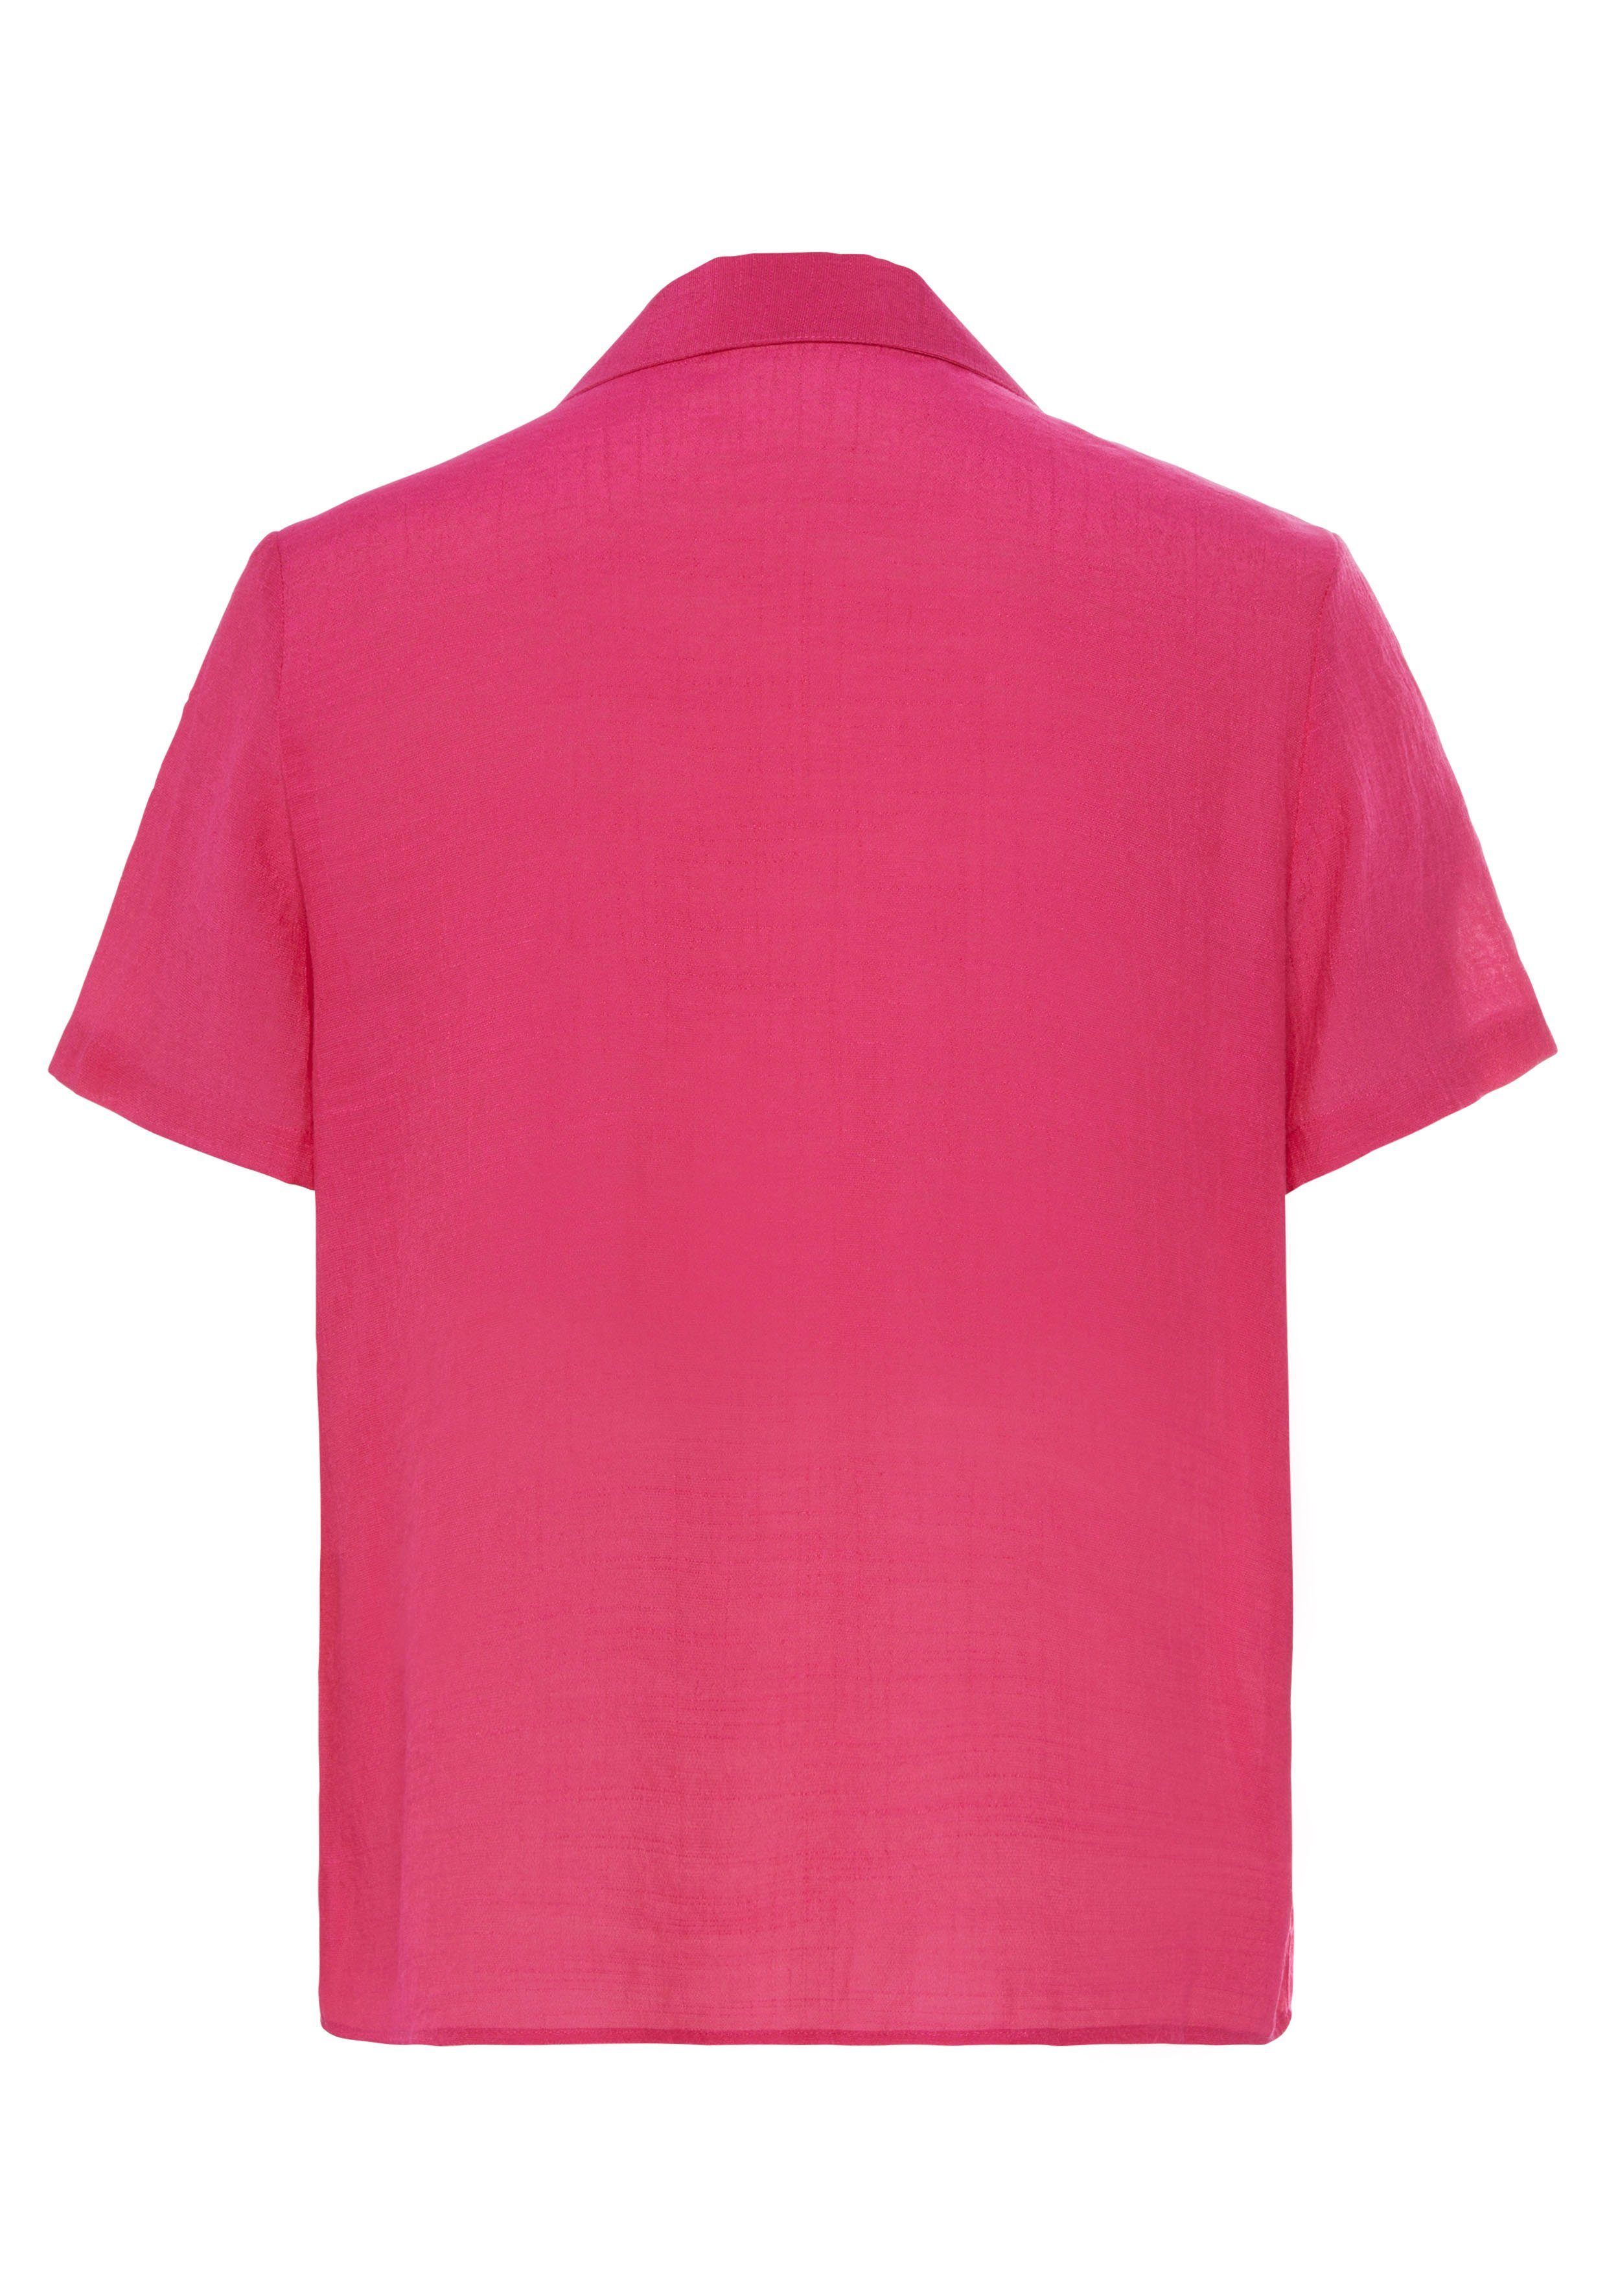 Vivance Kurzarmbluse mit Hemdkragen und pink Strandmode Knopfleiste, Hemdbluse